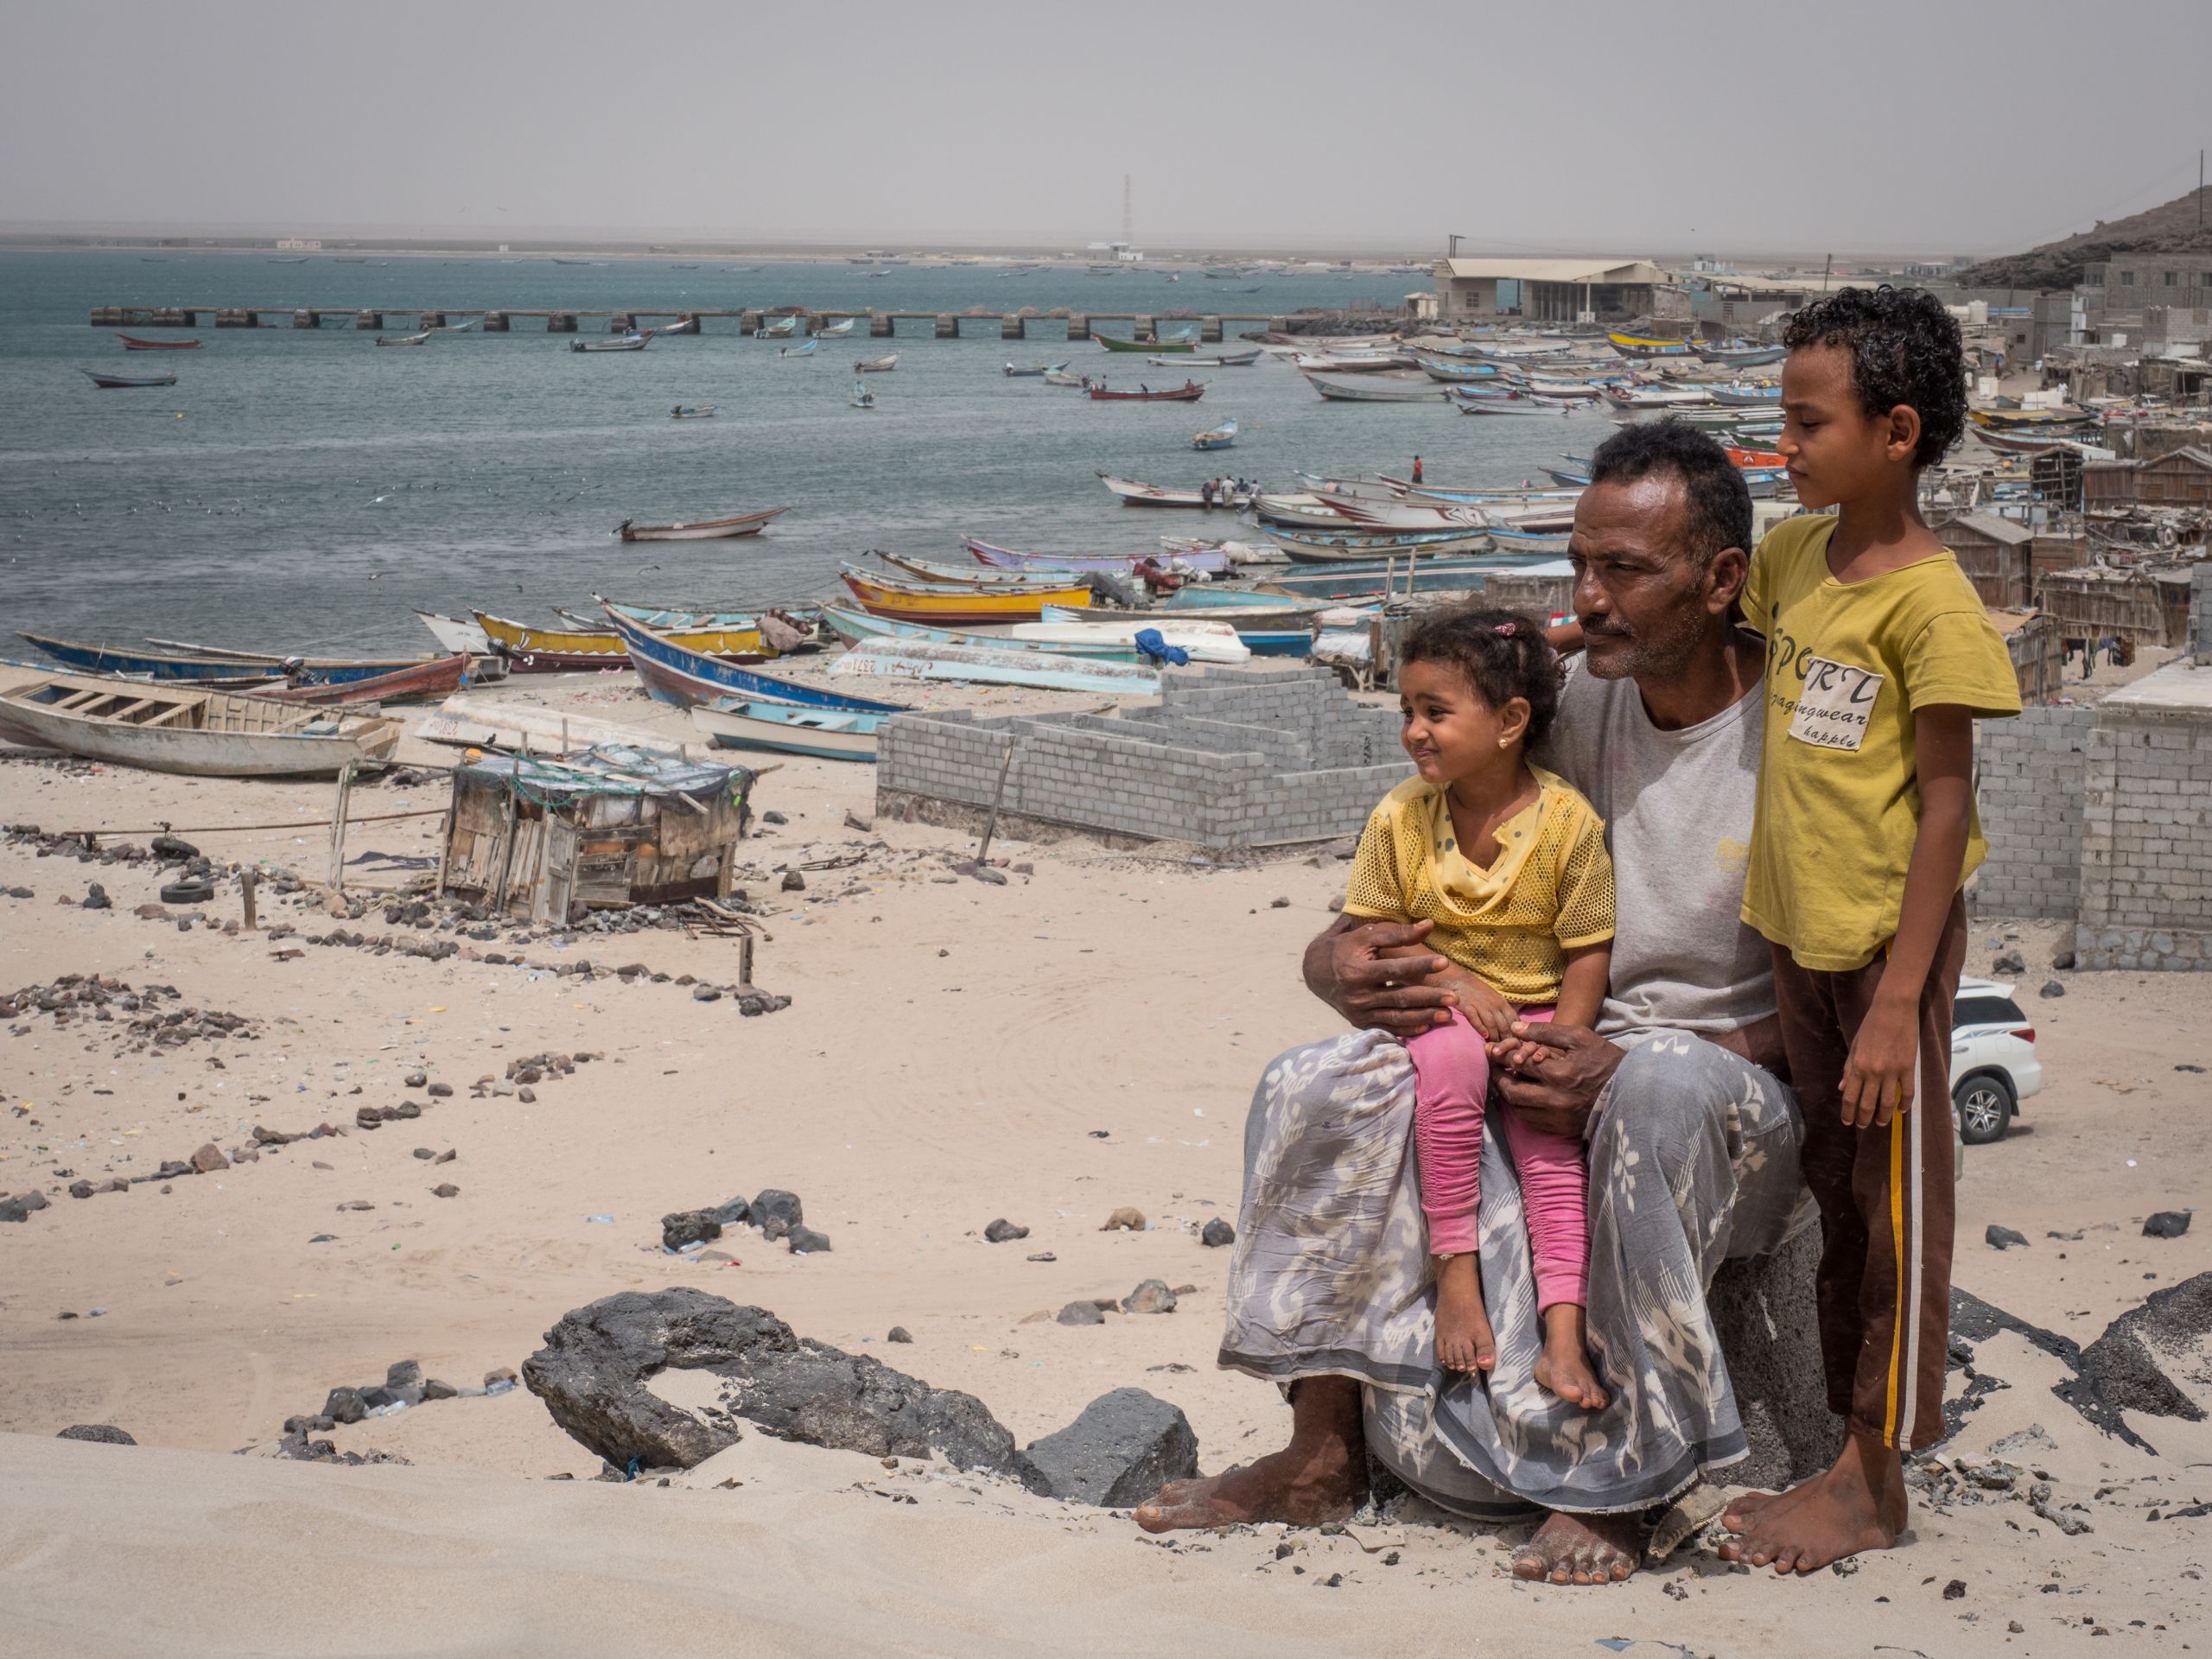 https://www.nrc.no/shorthand/stories/yemen---how-fishing-communities-are-fighting-back/assets/xE3lmRQlBj/yemen-3-2-2560x1920.jpeg